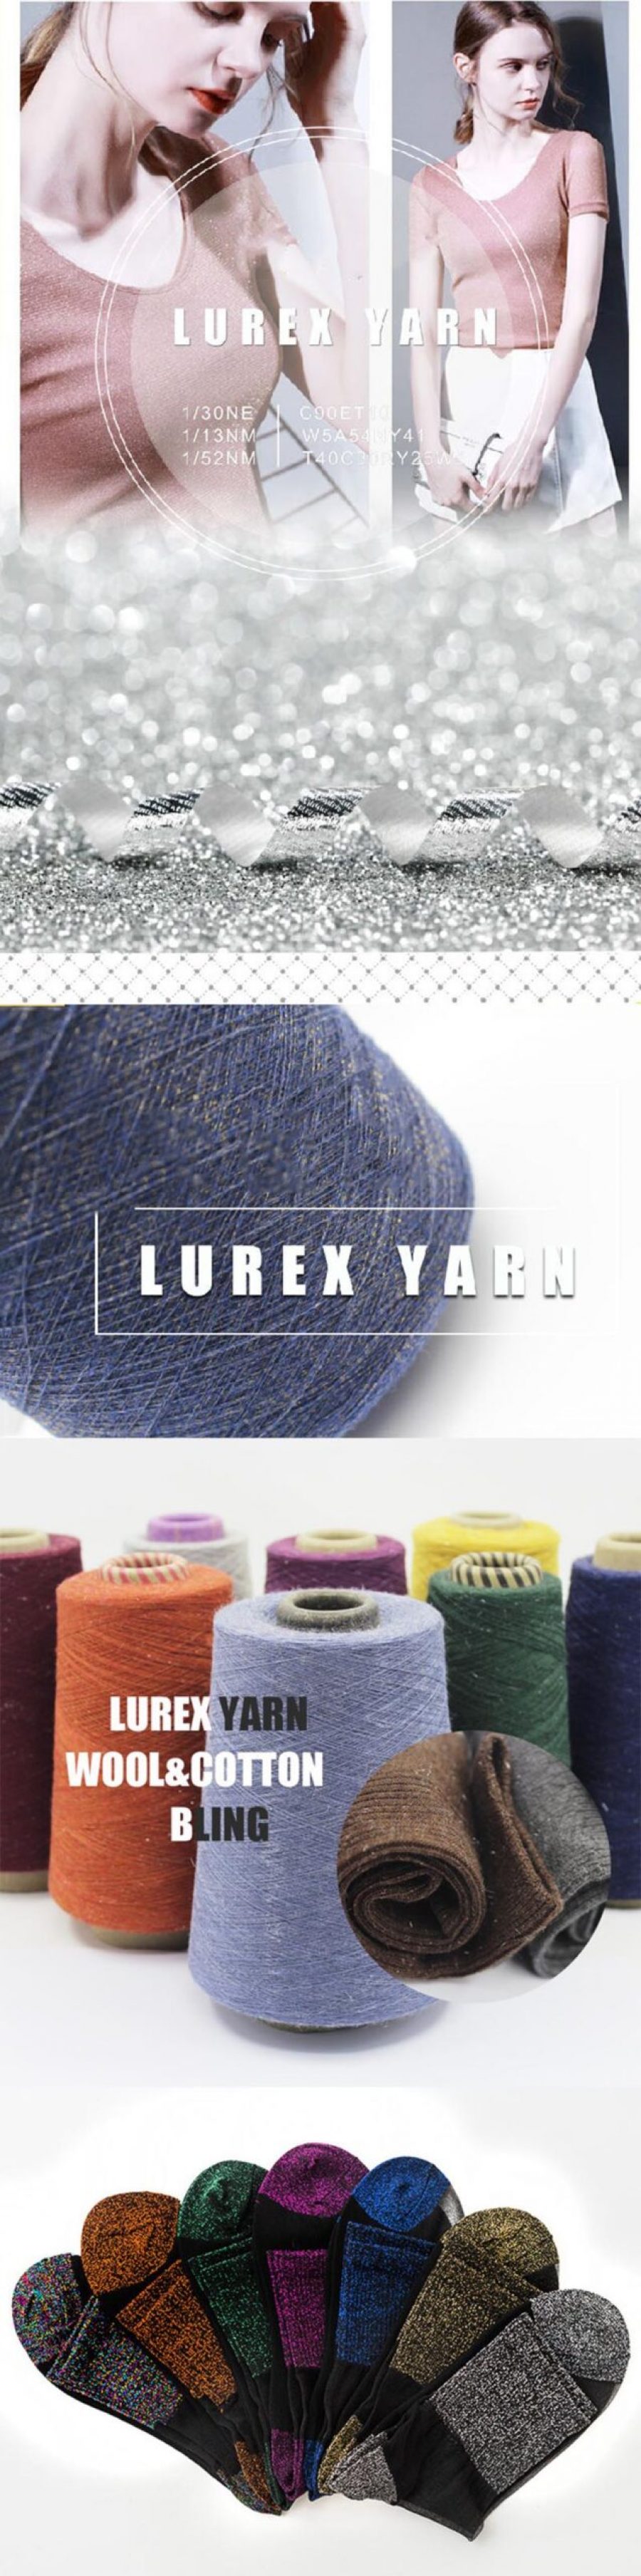 Lurex yarn